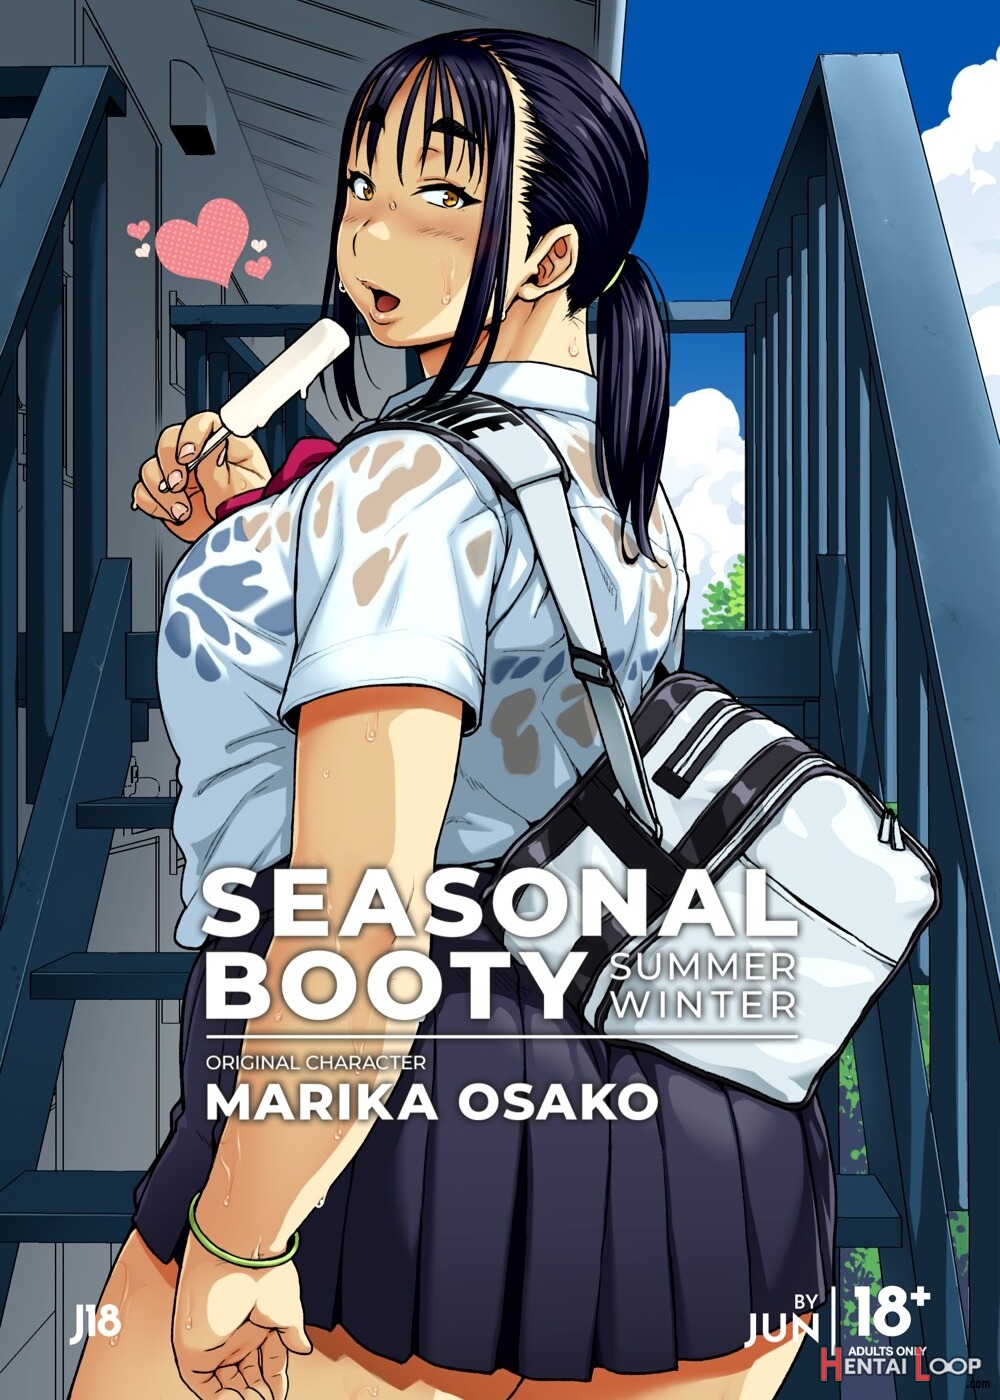 Read Seasonal Booty (by Jun) - Hentai doujinshi for free at HentaiLoop